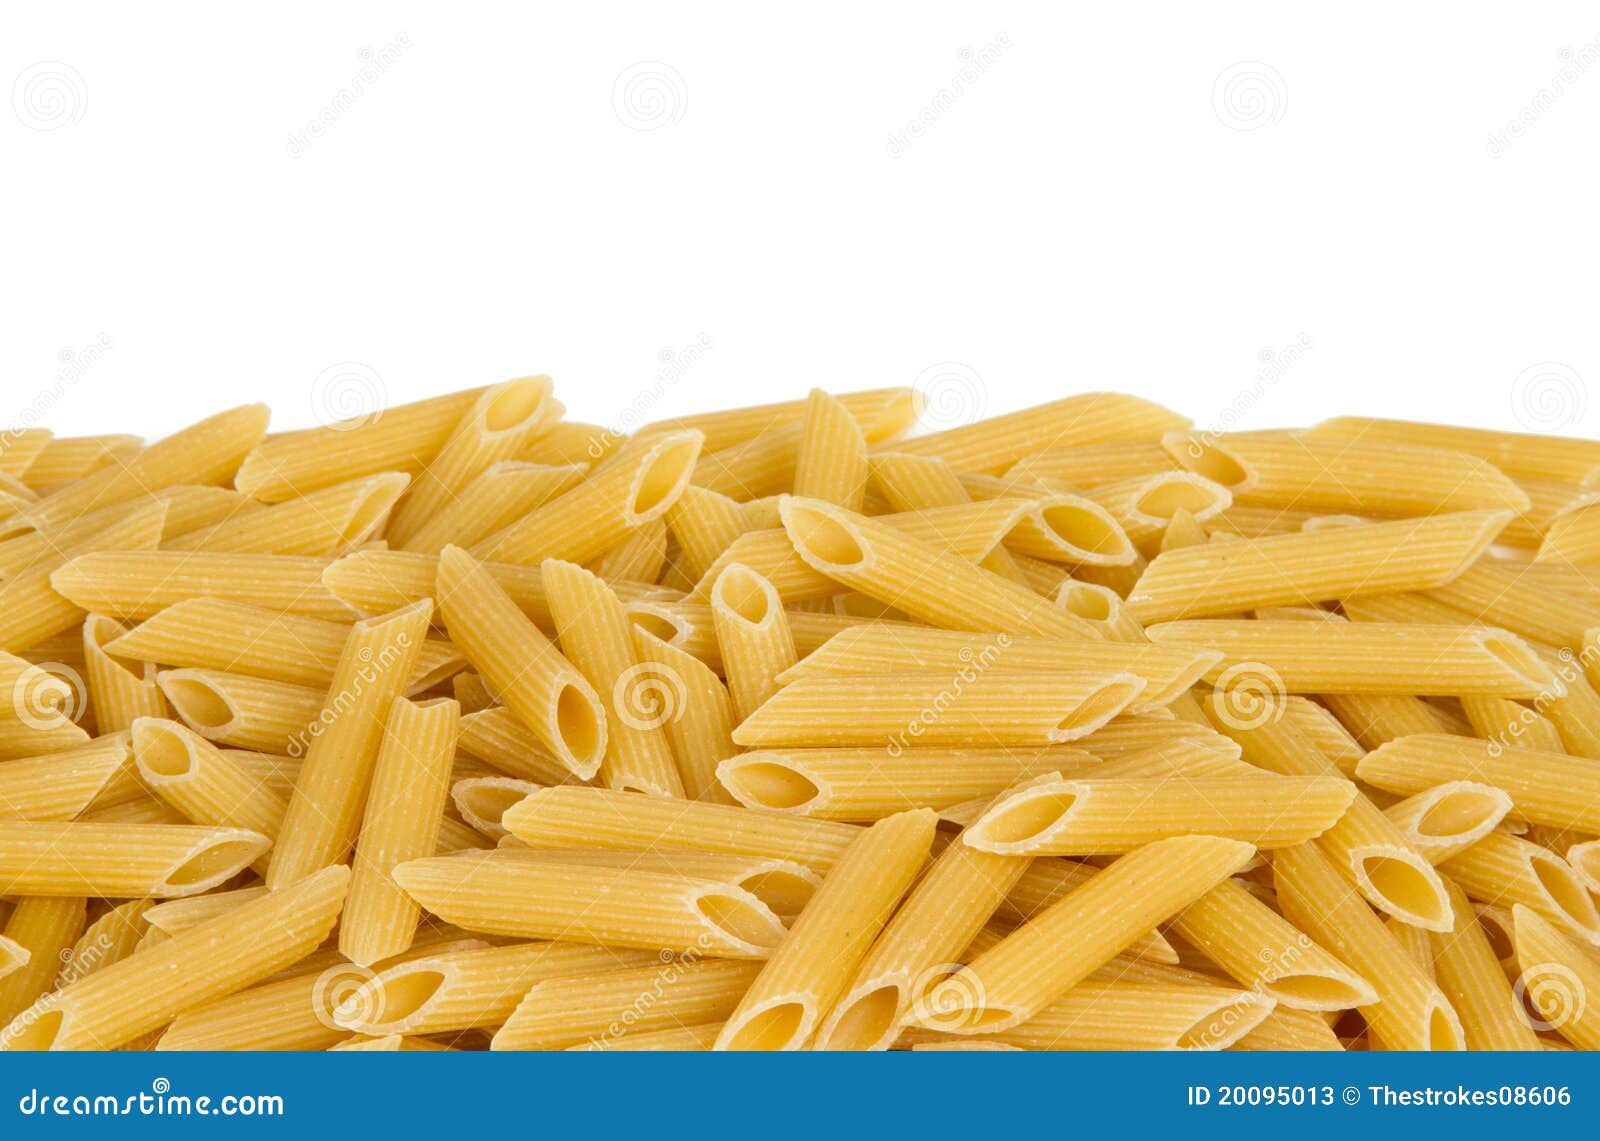 Pasta On White Background Stock Photos - Image: 20095013